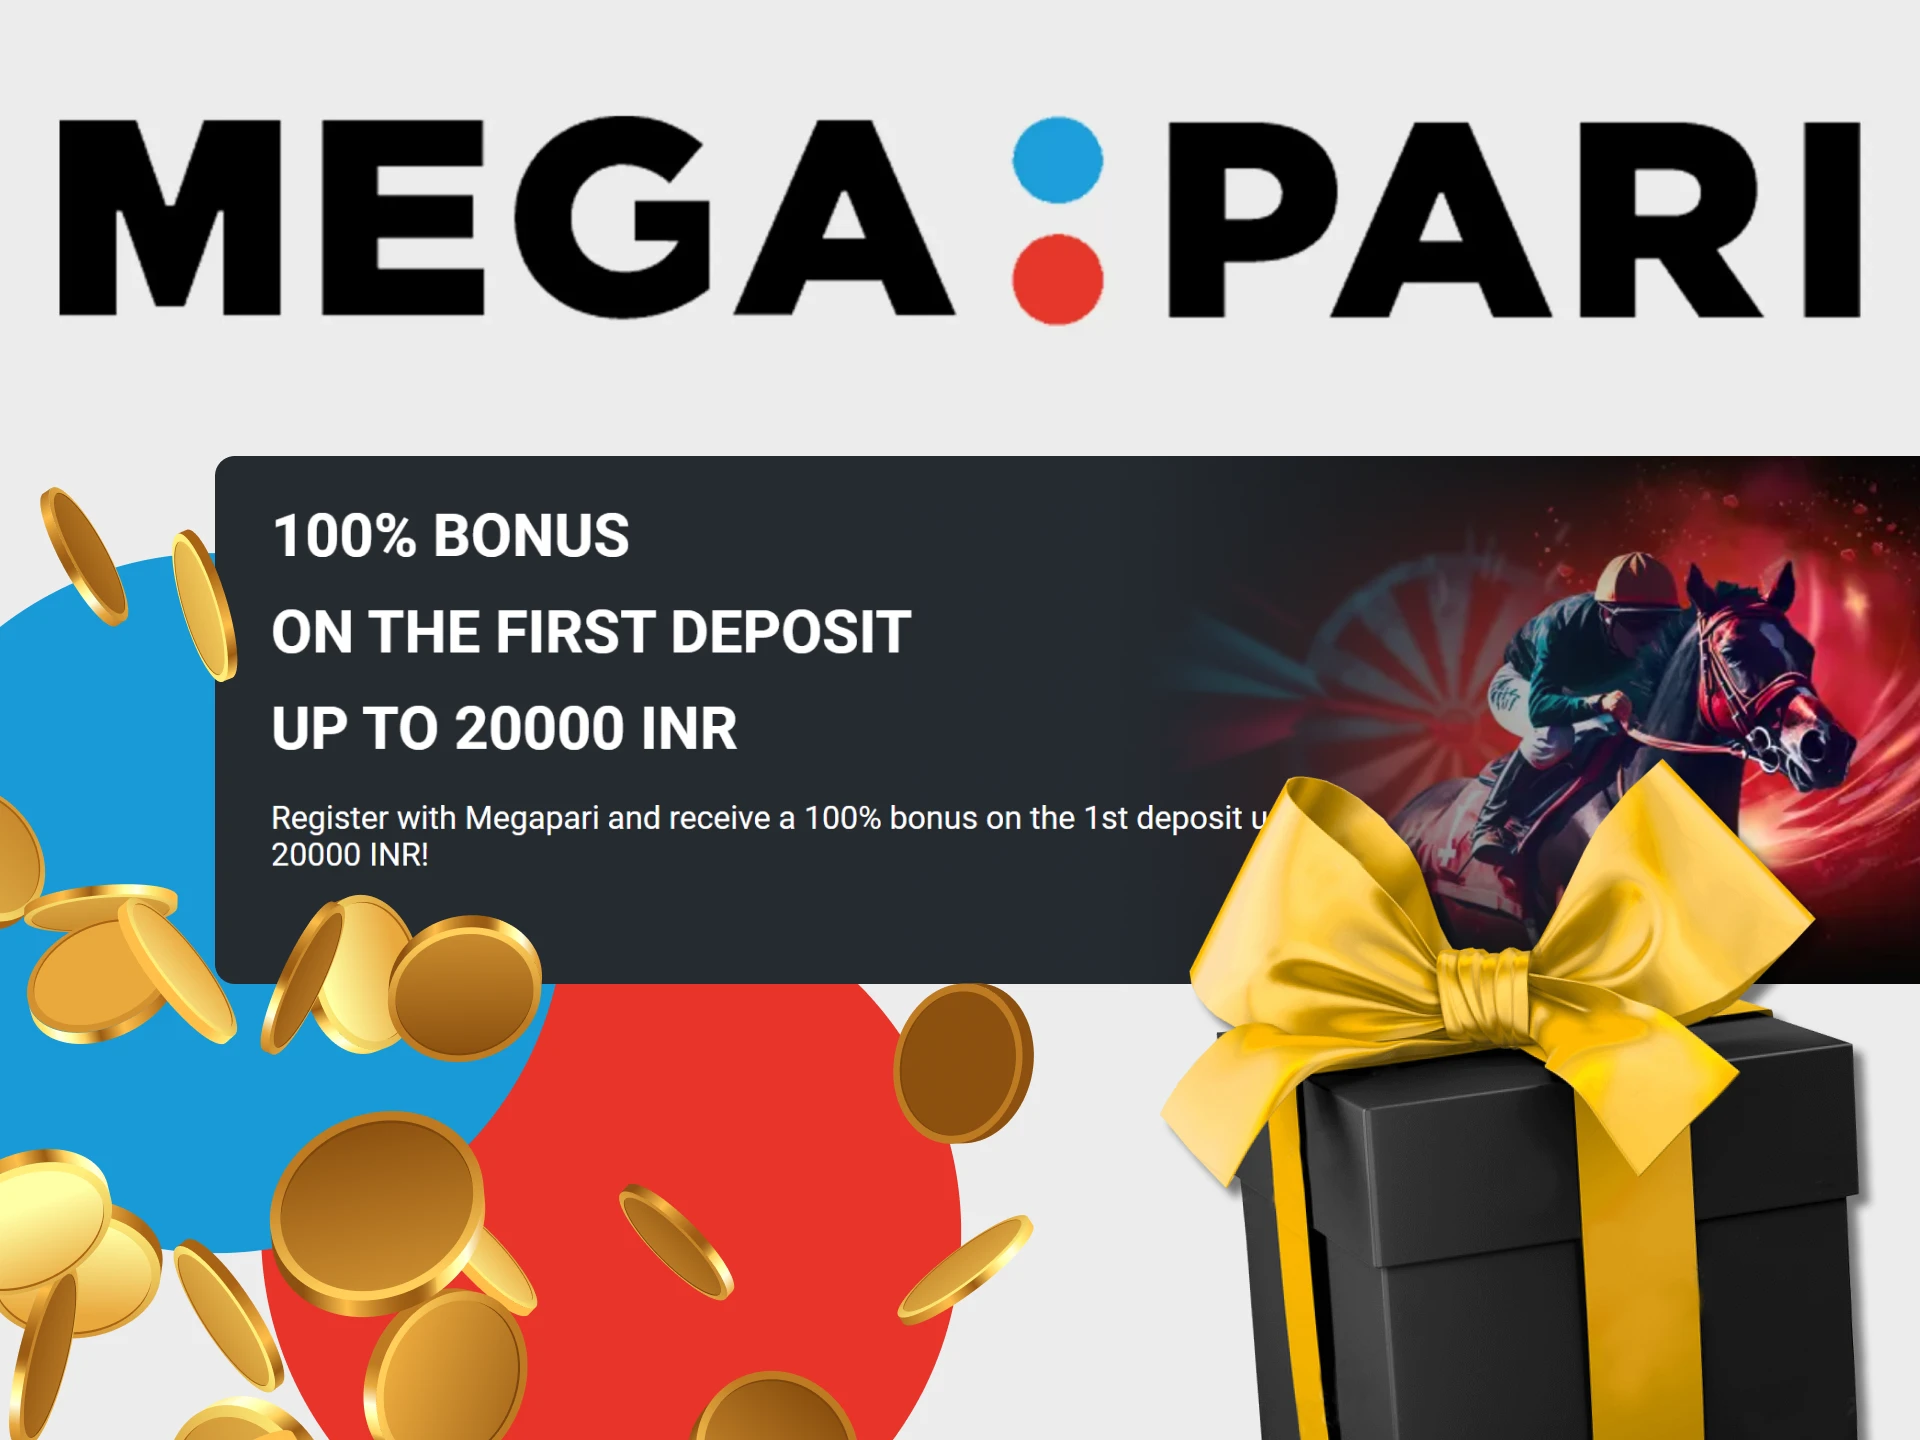 Get the first deposit bonus of 100% up to INR 20,000 in the Megapari app.